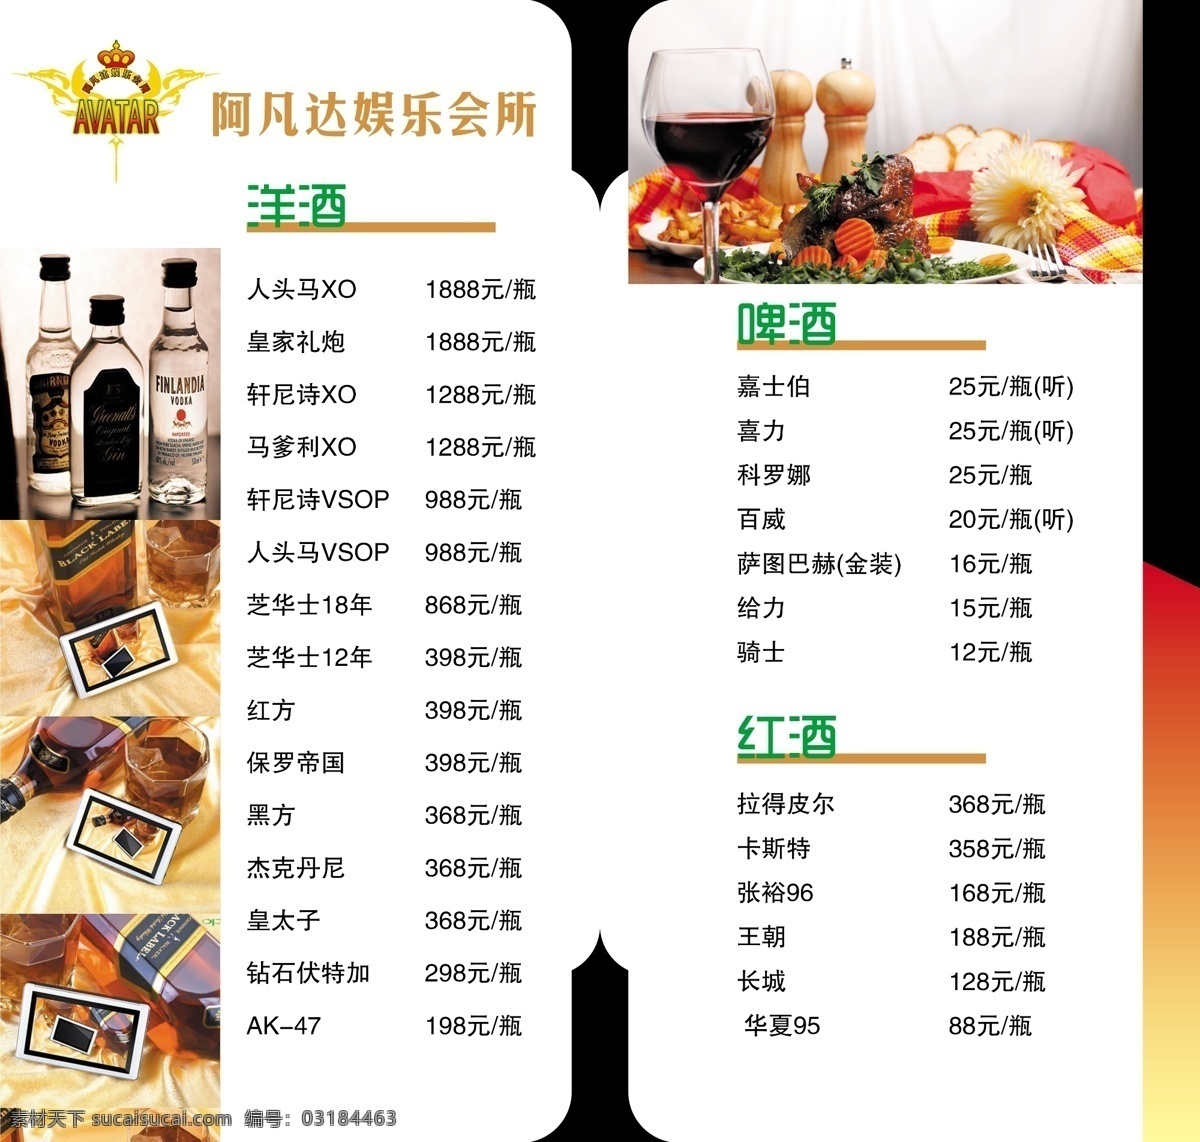 ktv酒水单 酒水单 洋酒 红酒 茶饮料 菜单菜谱 广告设计模板 源文件